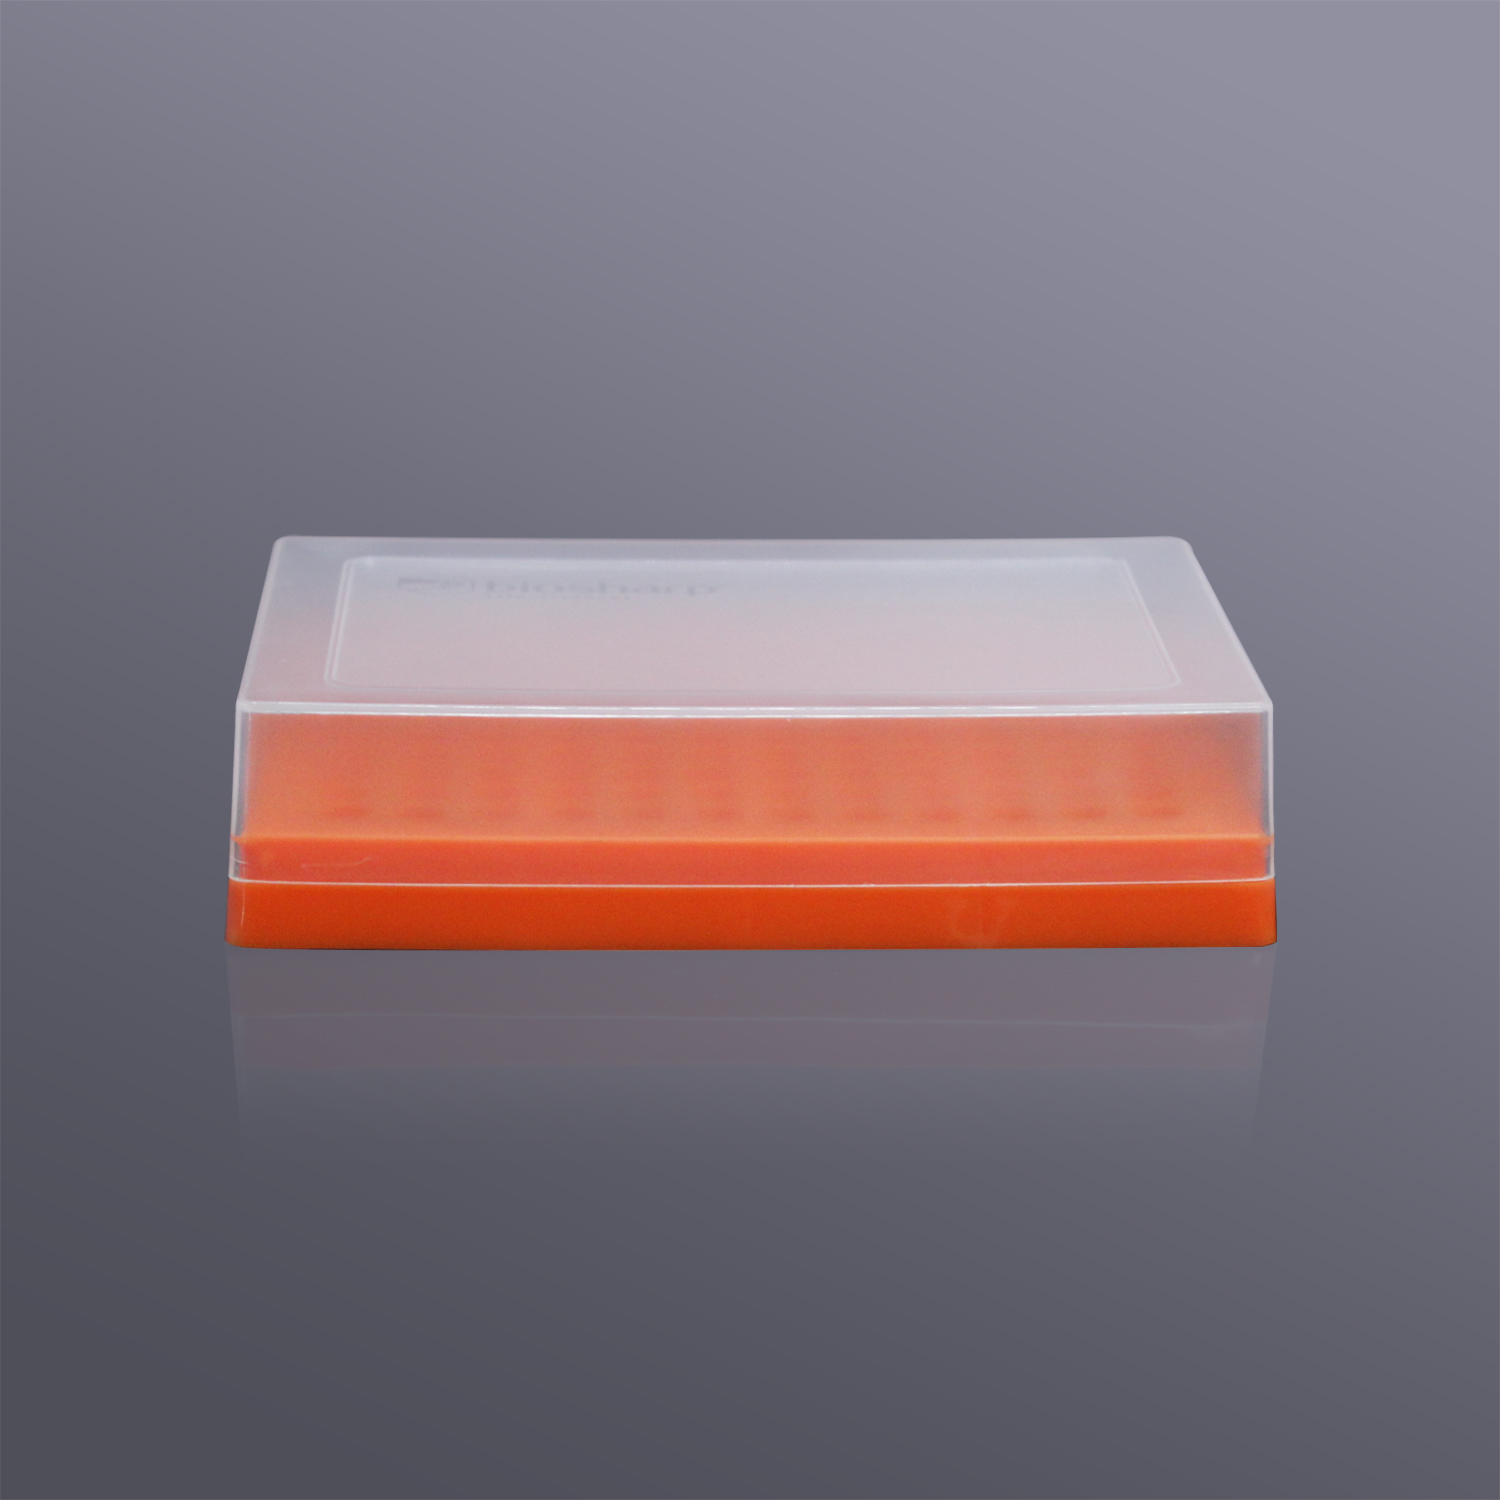 0.2ml薄壁管盒,橙色